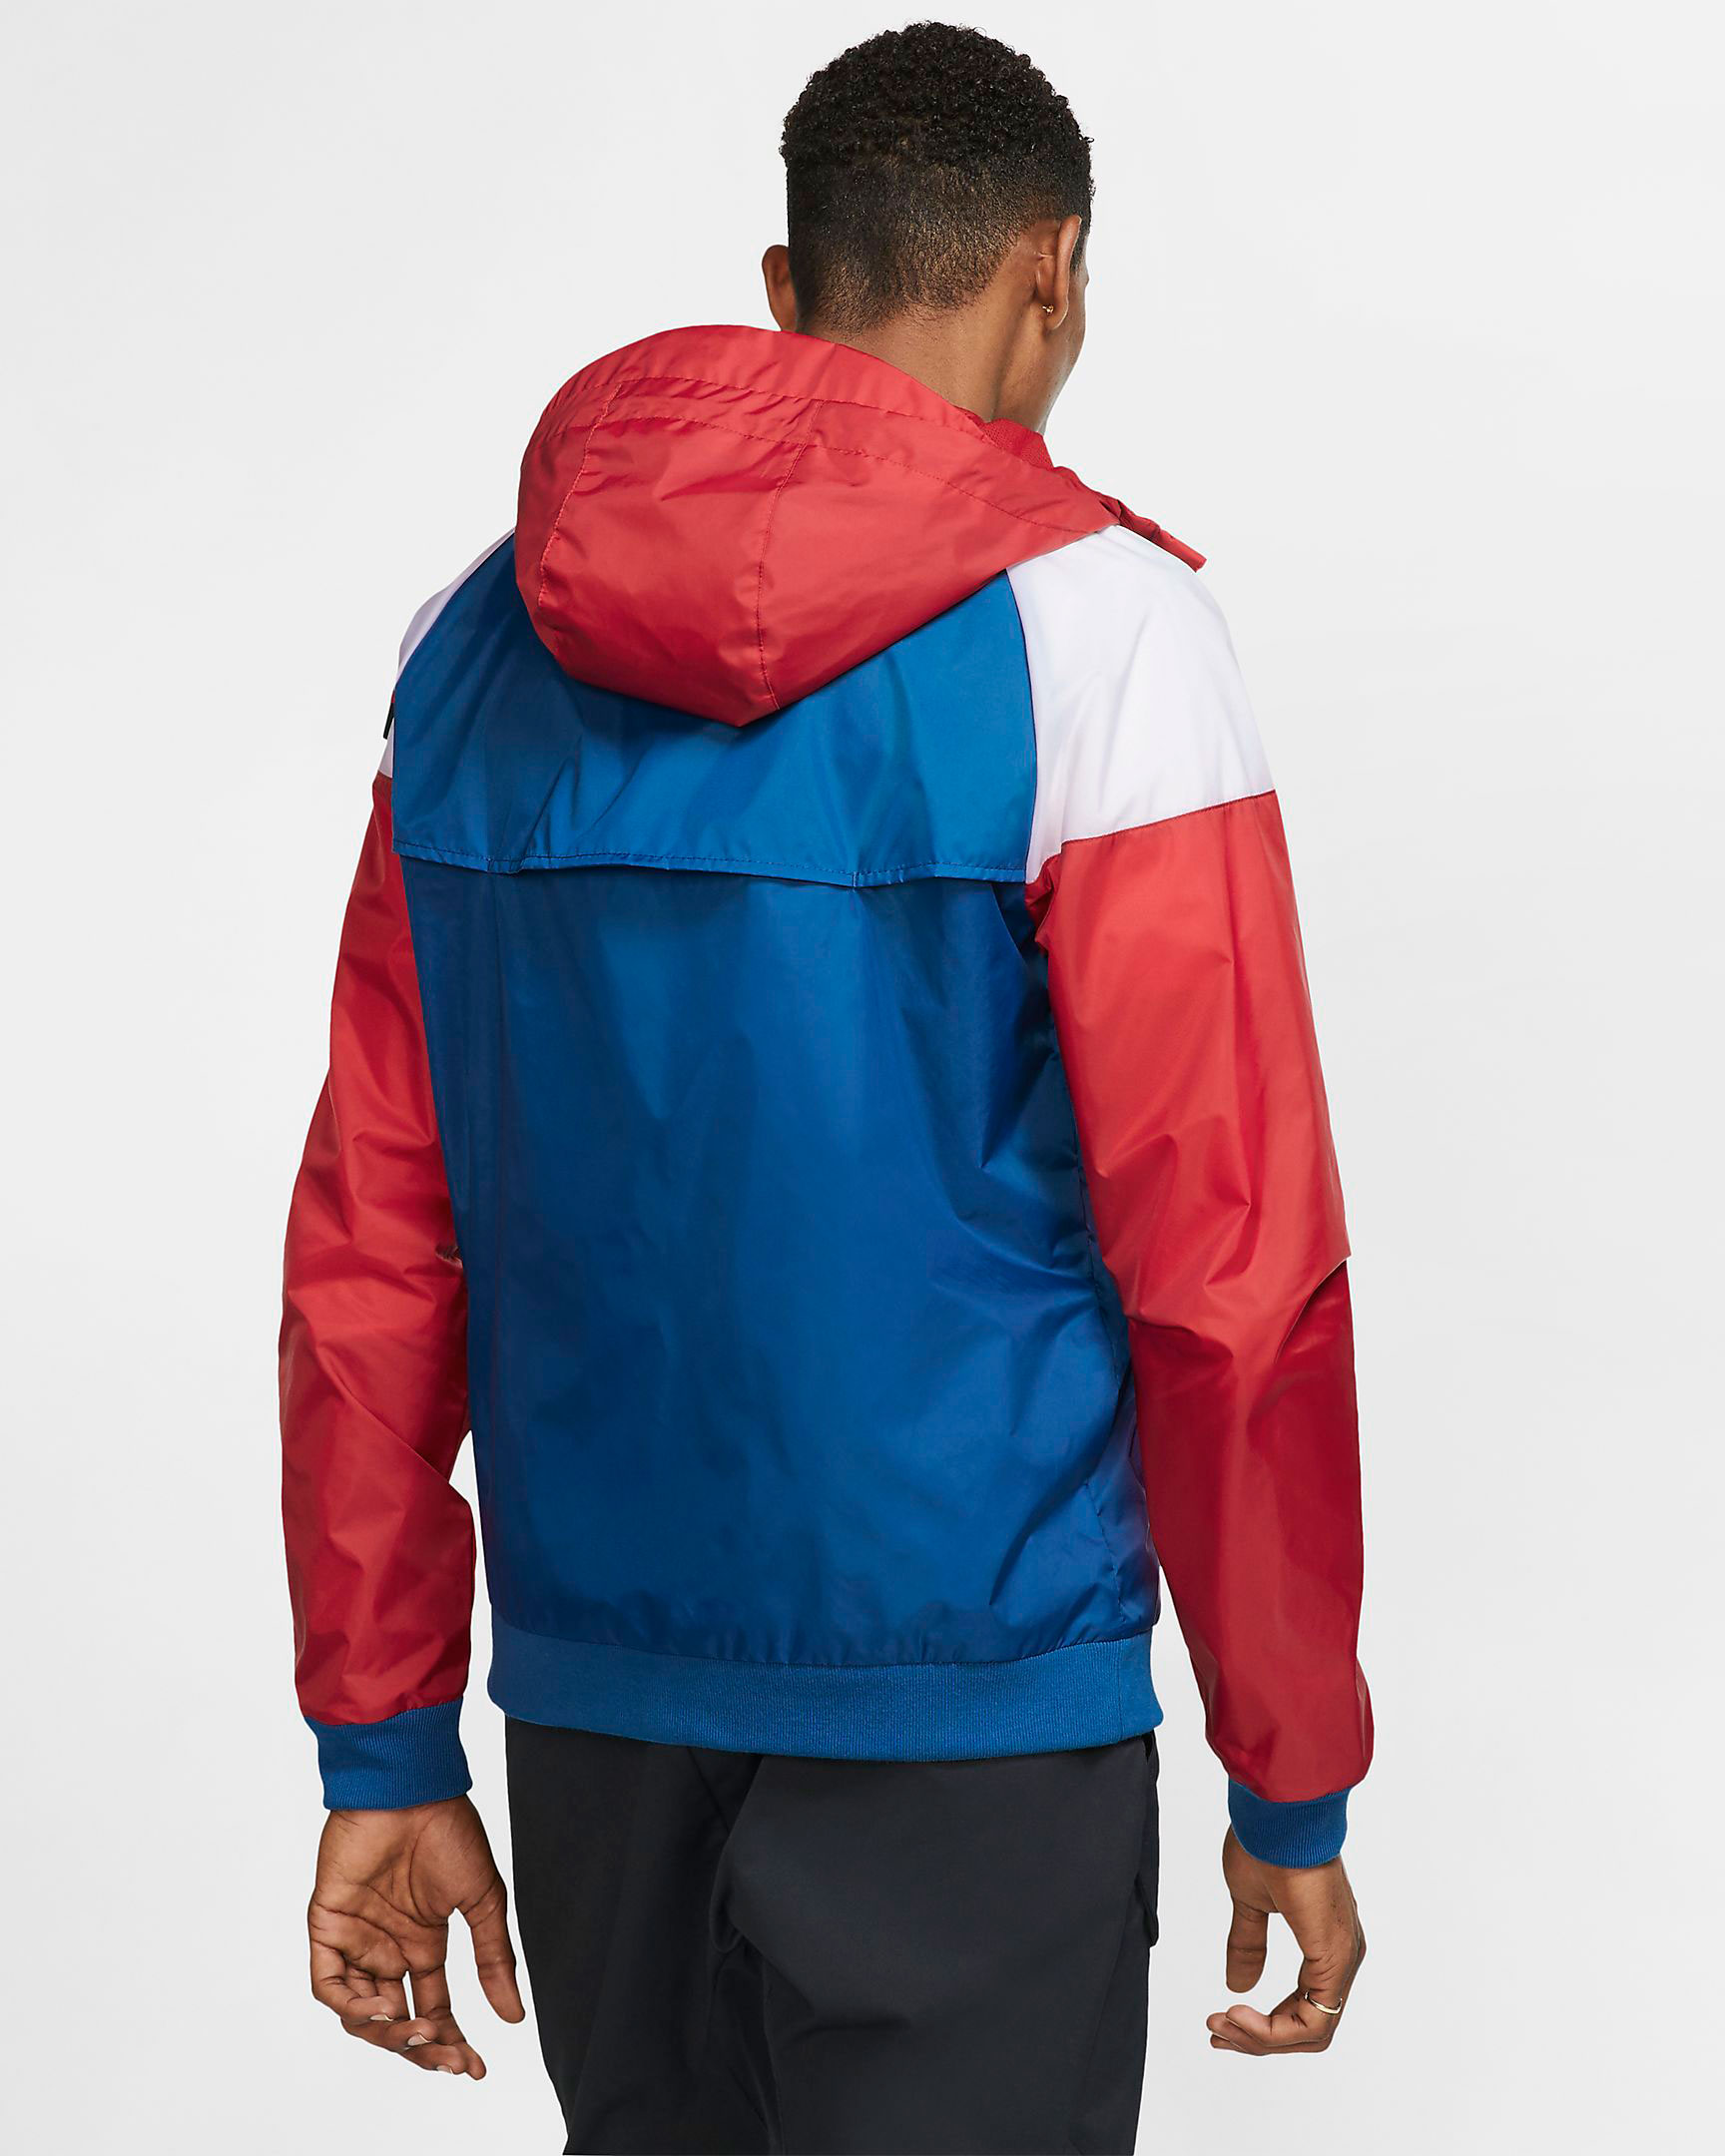 nike-americana-red-white-blue-windrunner-jacket-2